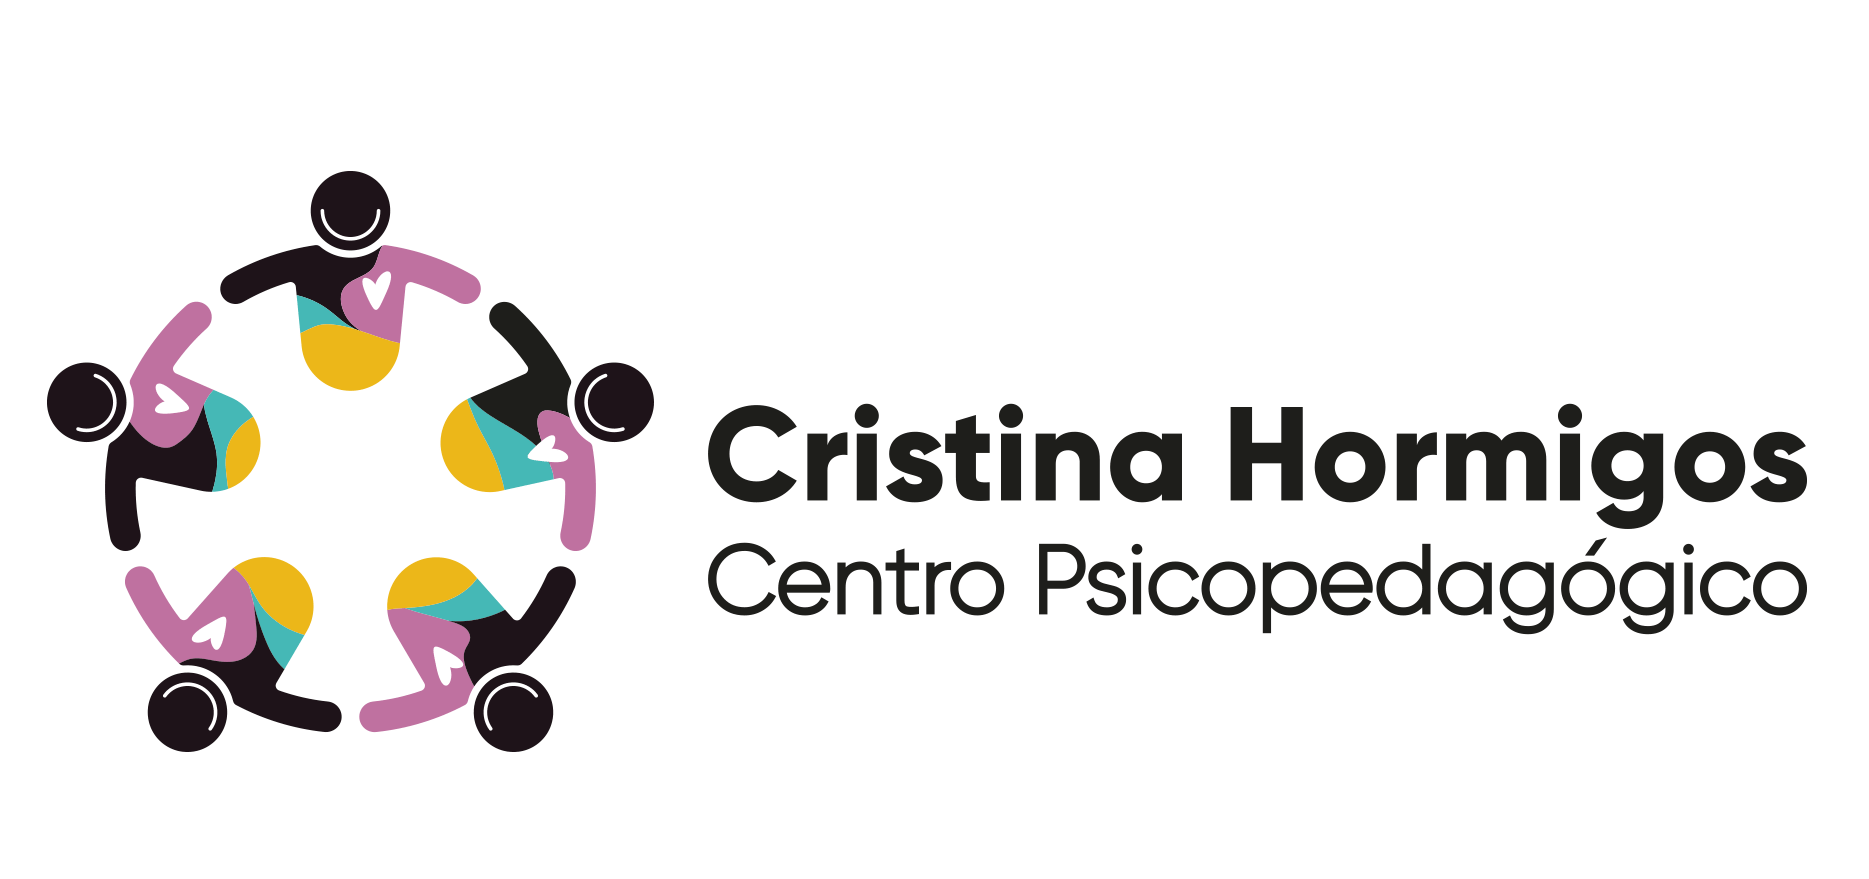 Centro Psicopedagógico en Albacete Cristina Hormigos